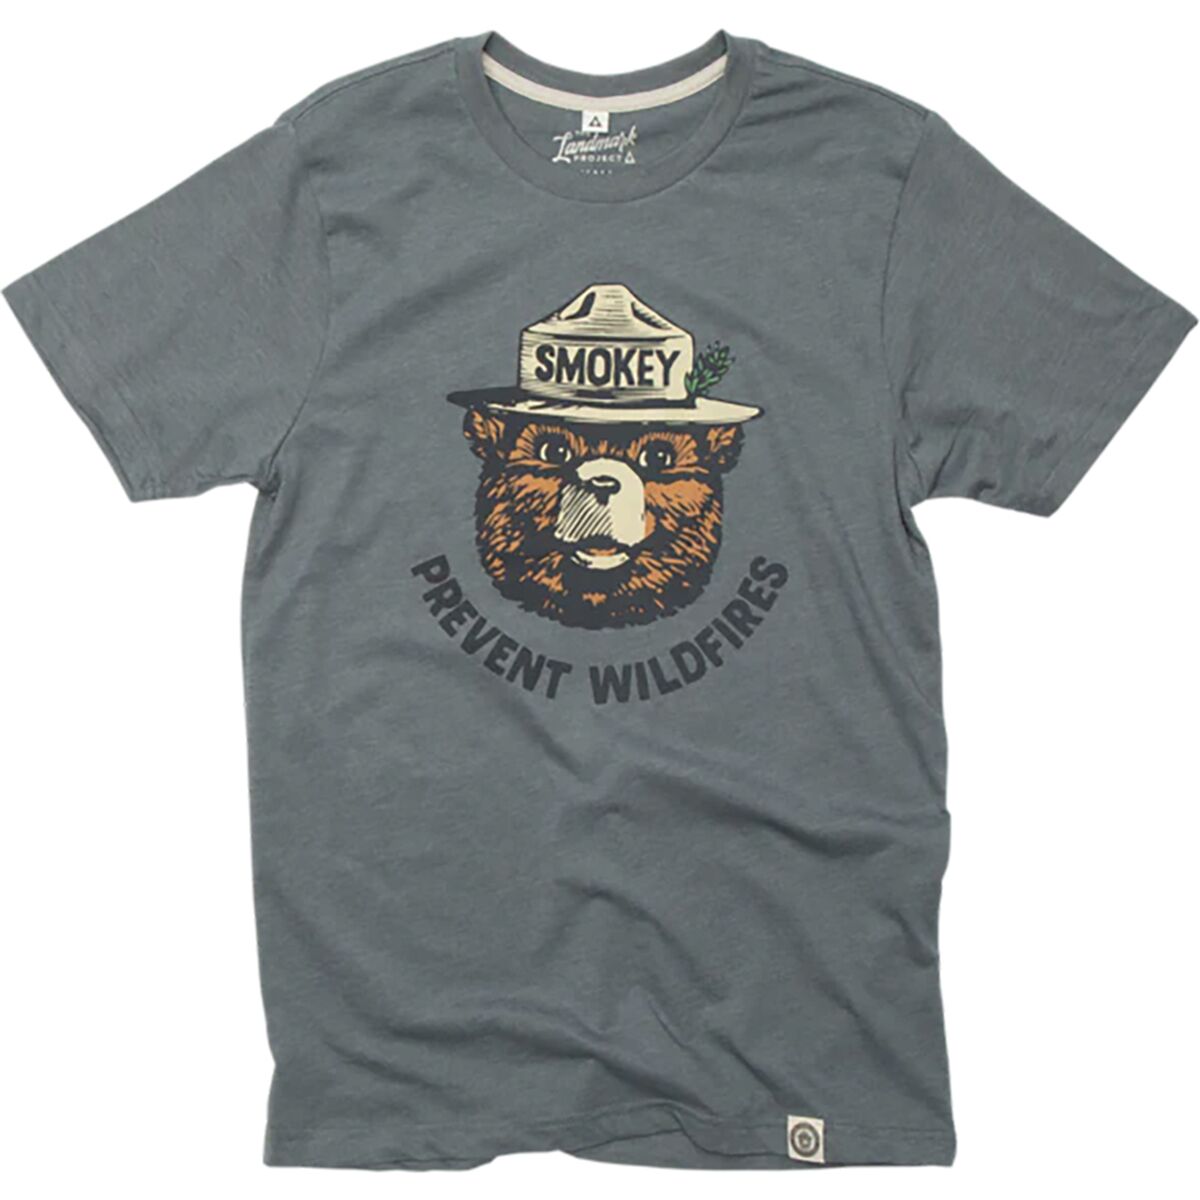 Smokey Retro Short-Sleeve T-Shirt Landmark Project